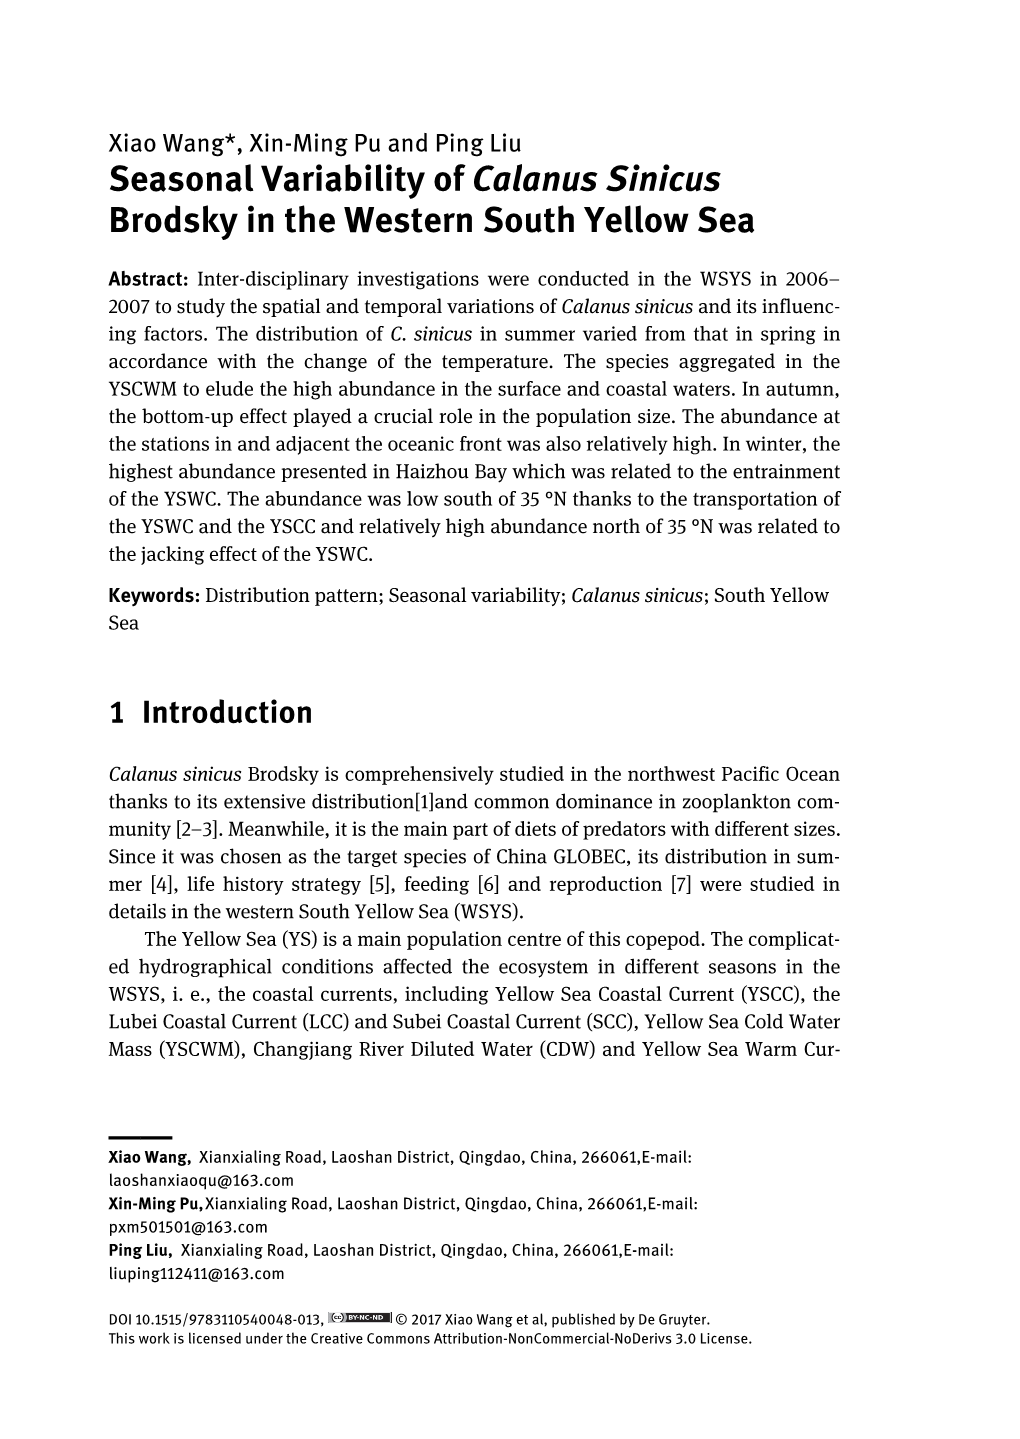 Seasonal Variability of Calanus Sinicus Brodsky in the Western South Yellow Sea